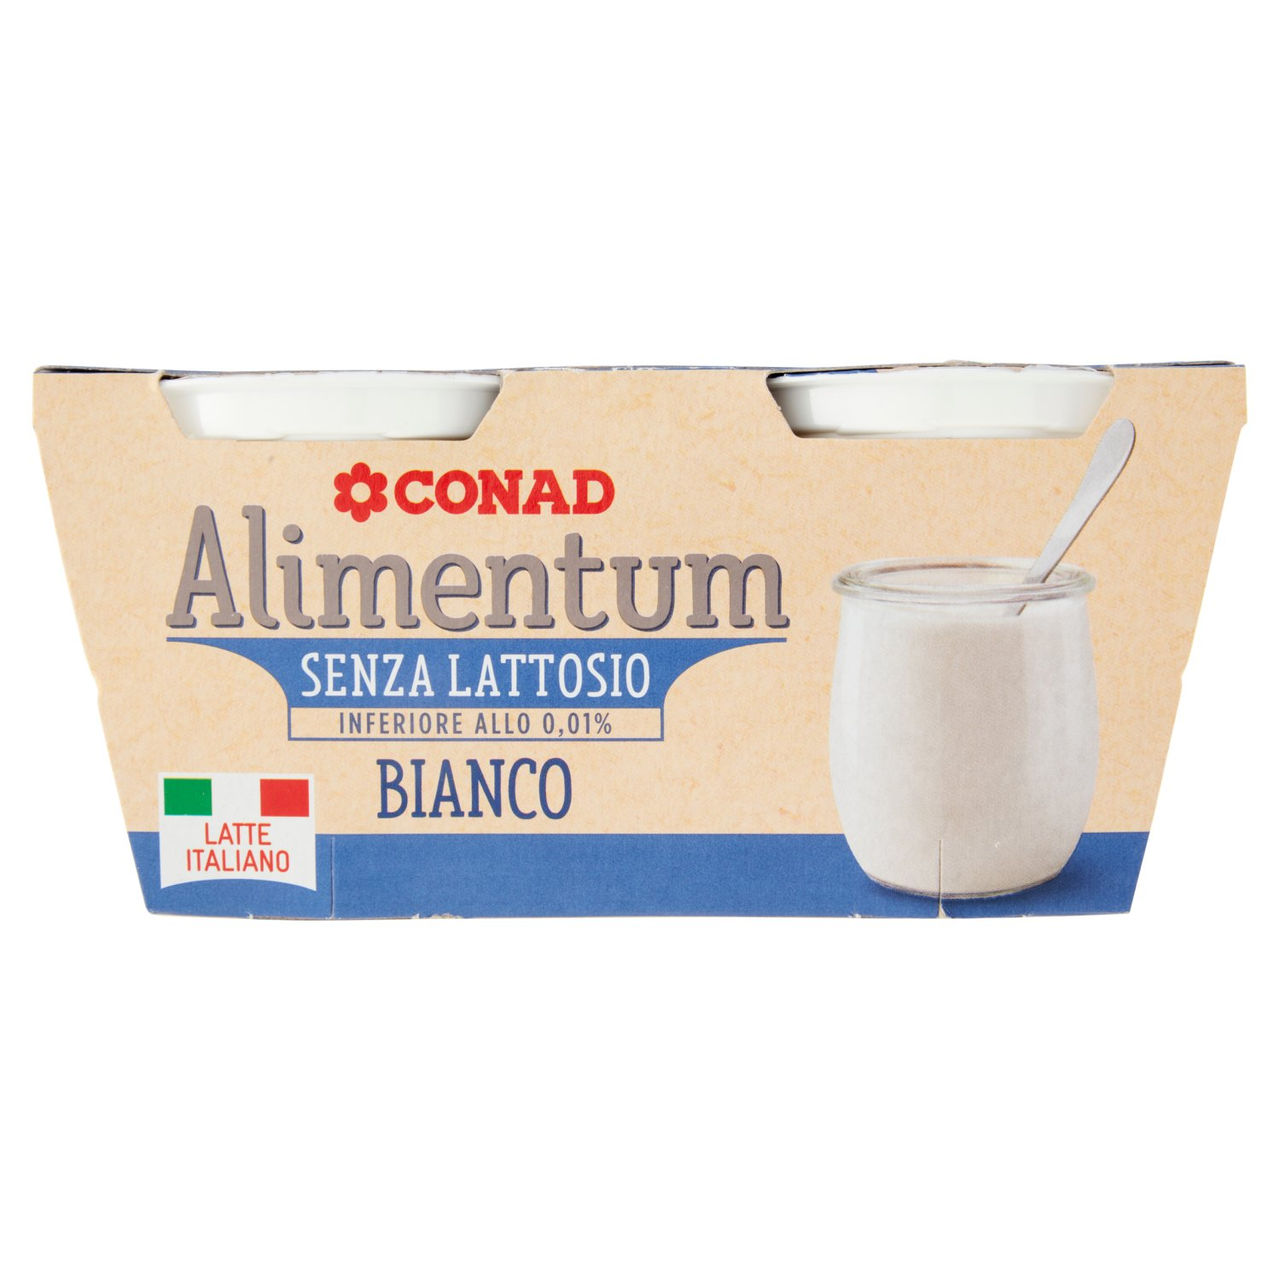 Alimentum Senza Lattosio Bianco Conad  online